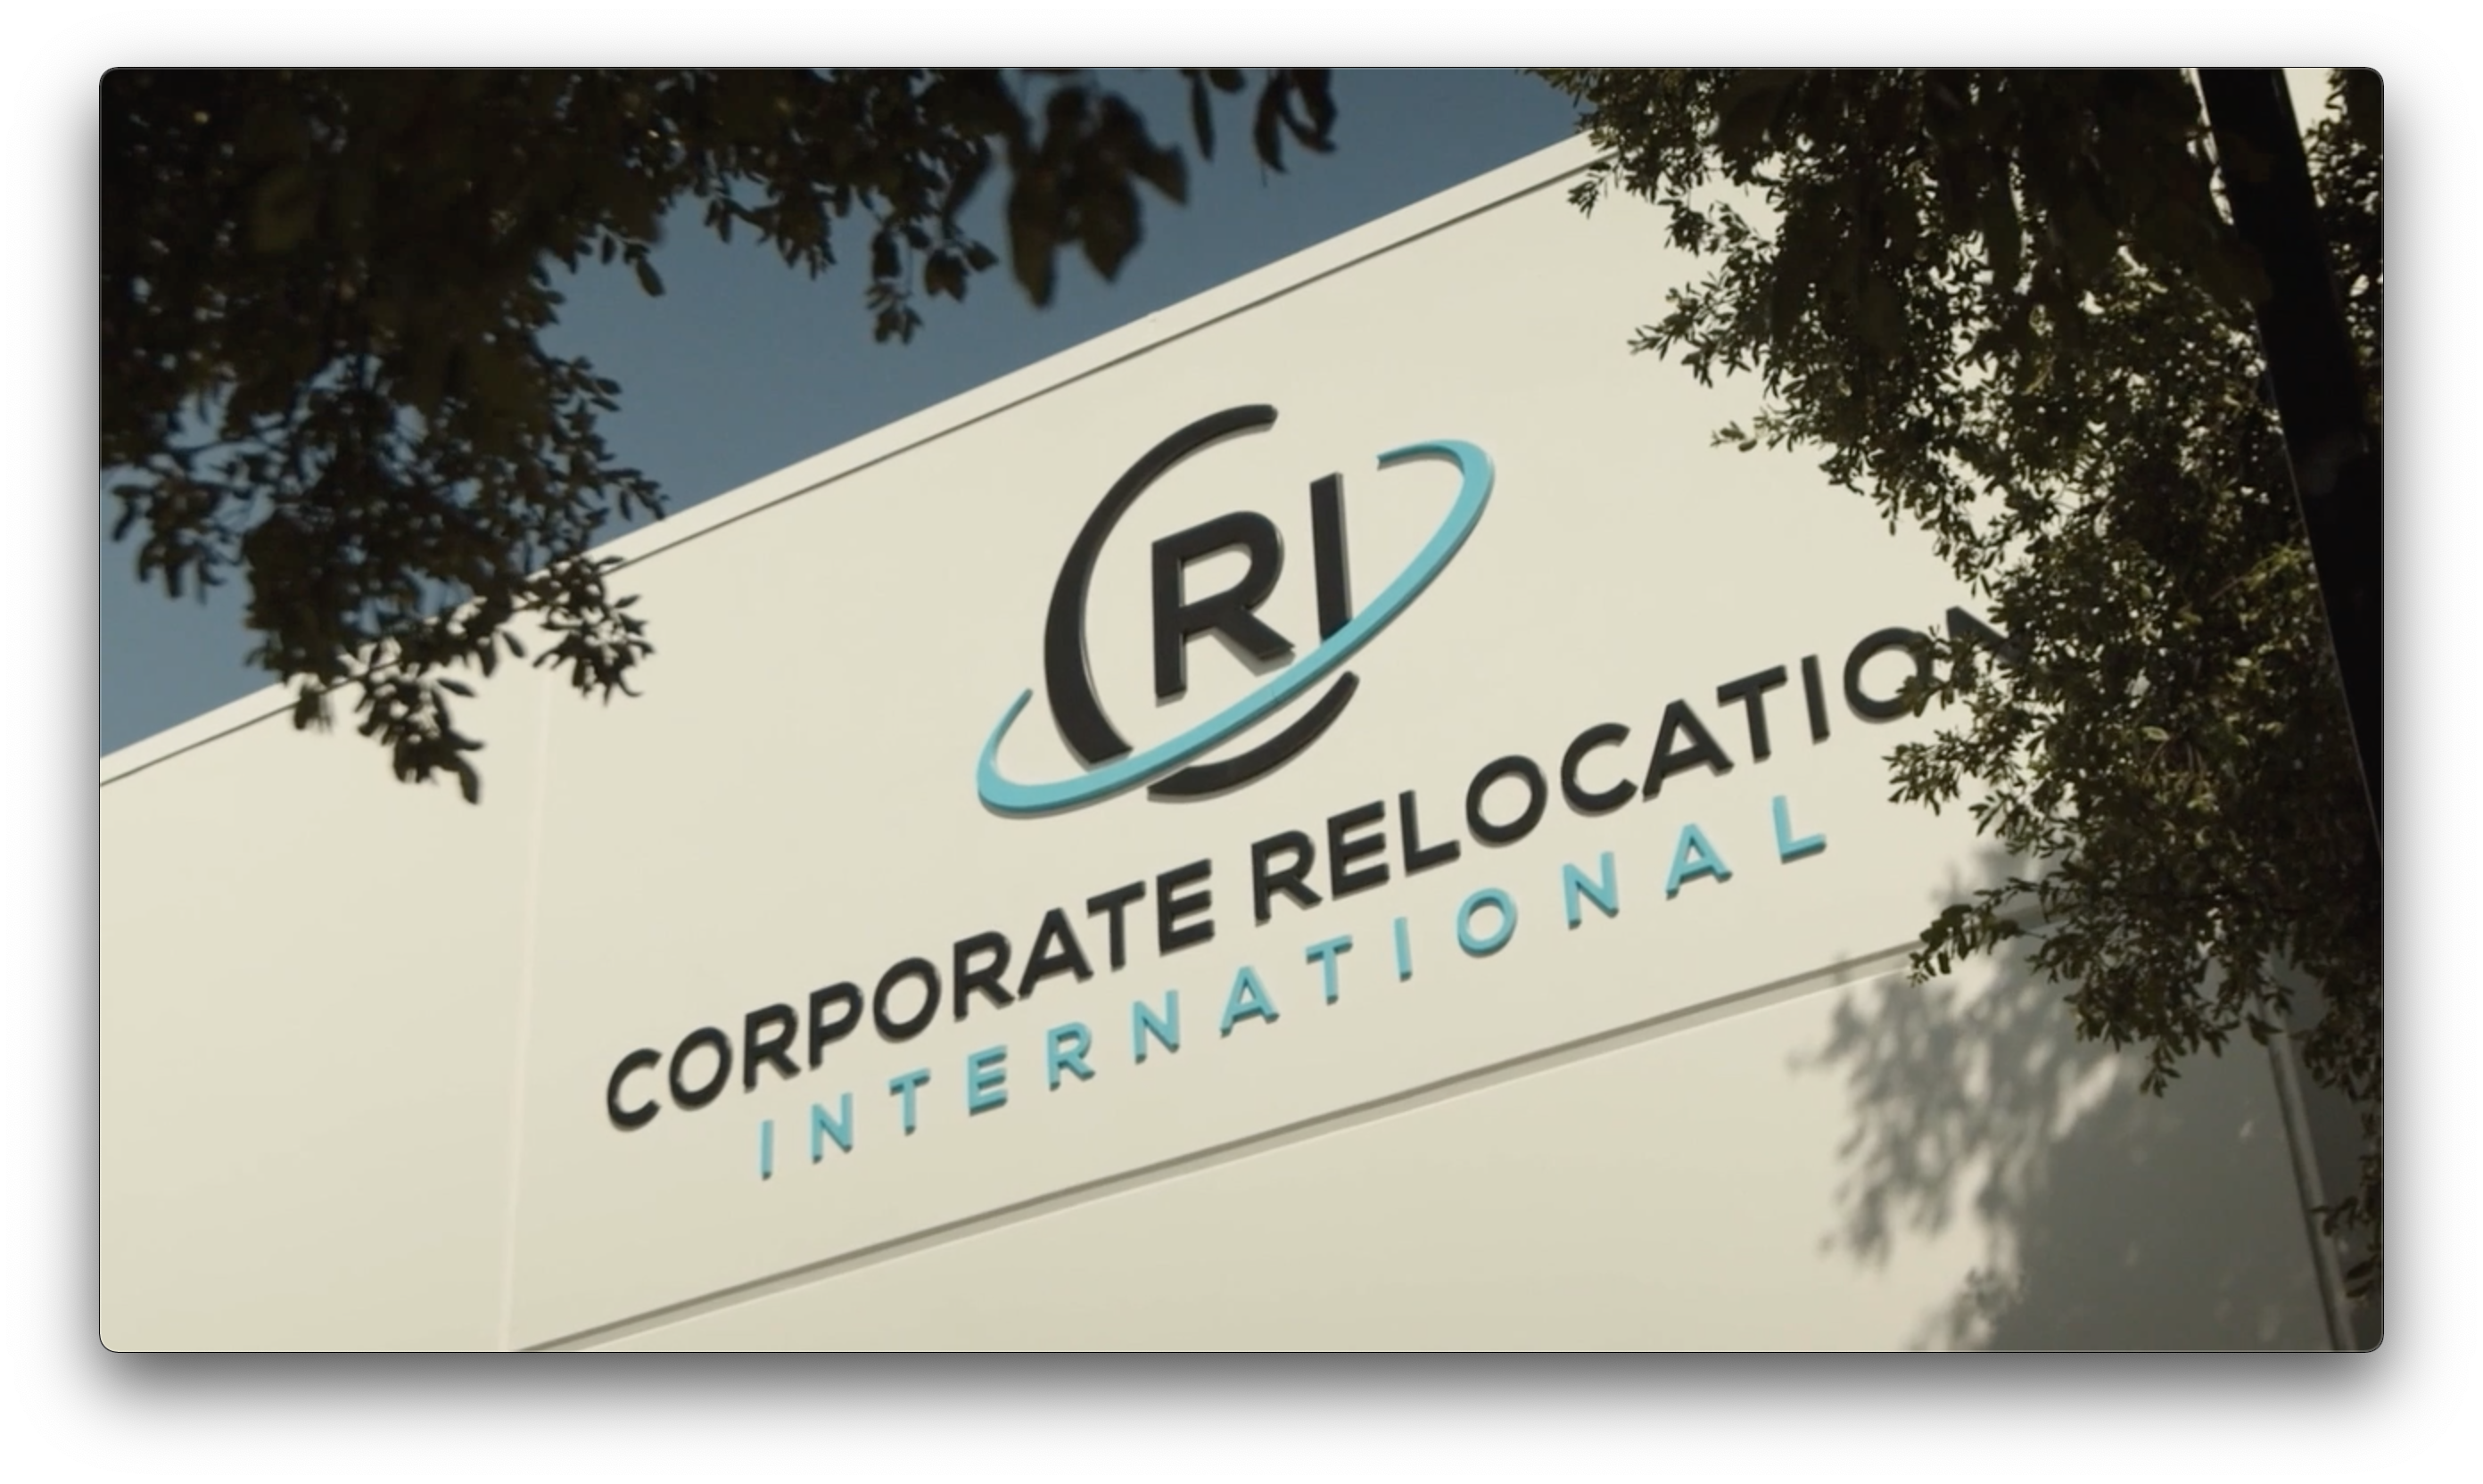 Corporate Relocation International - vendor materials